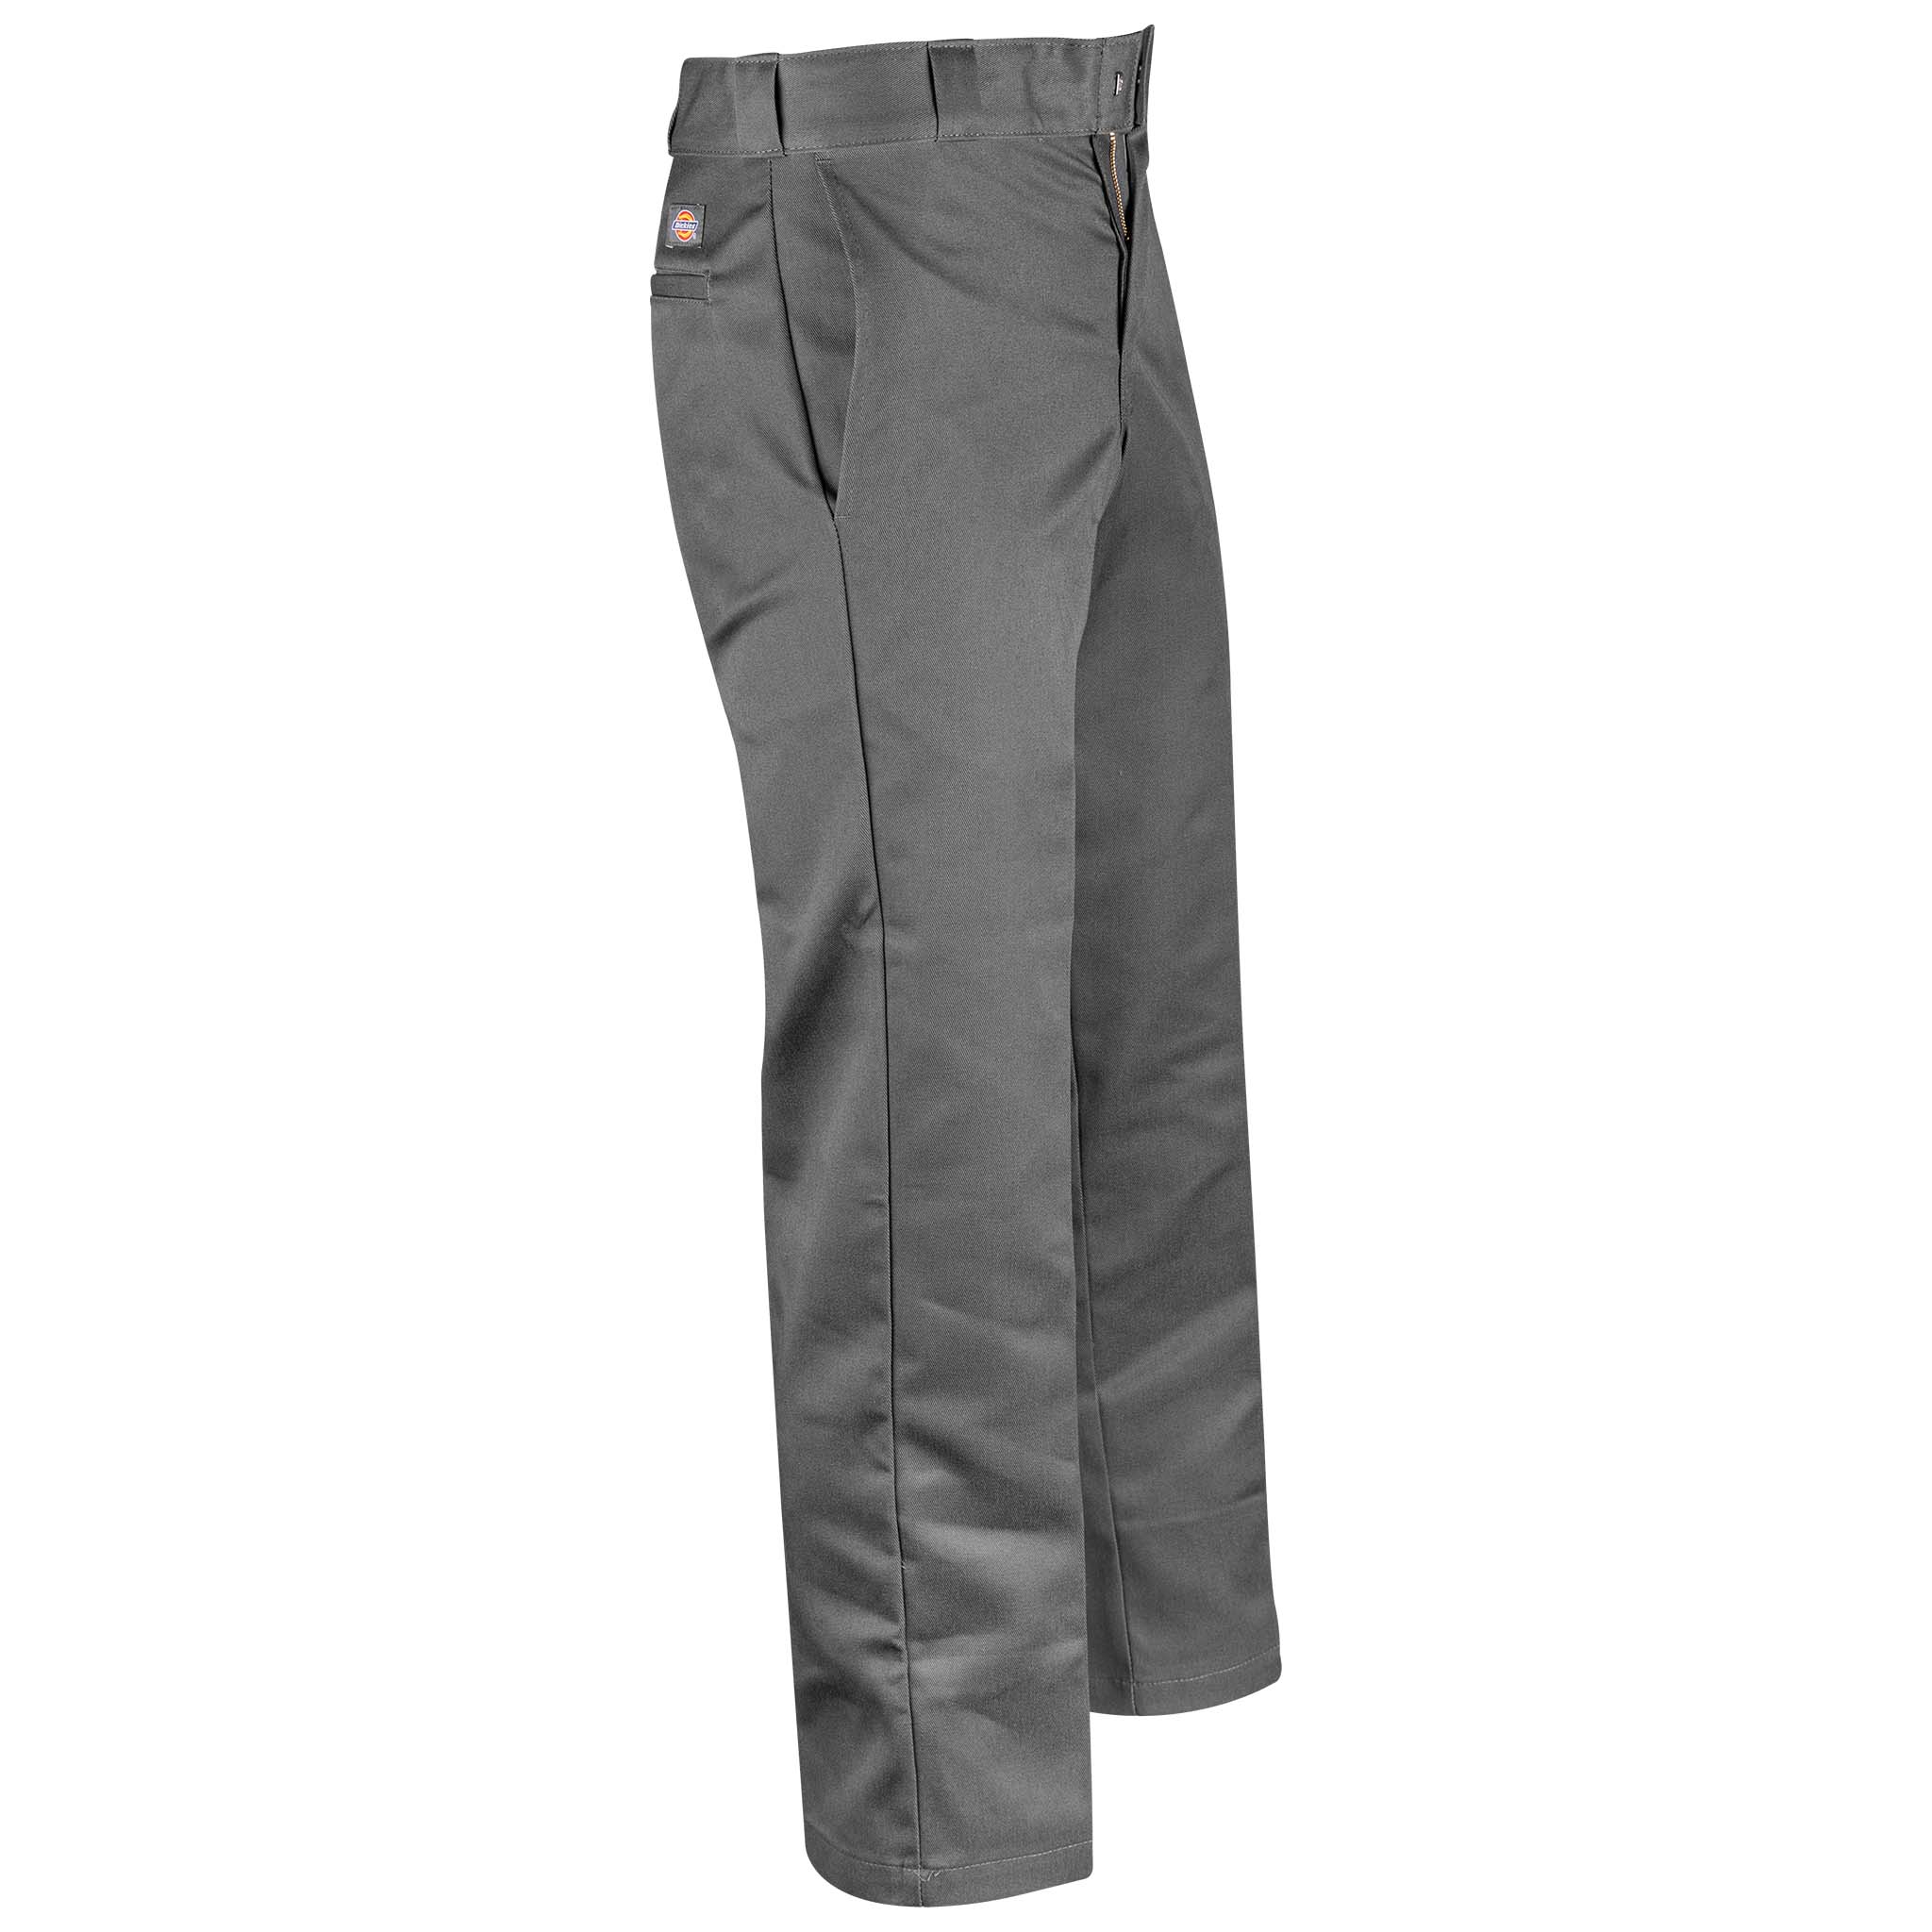 Dickies Original Fit 874 Work Pants (Size 28 - 40)